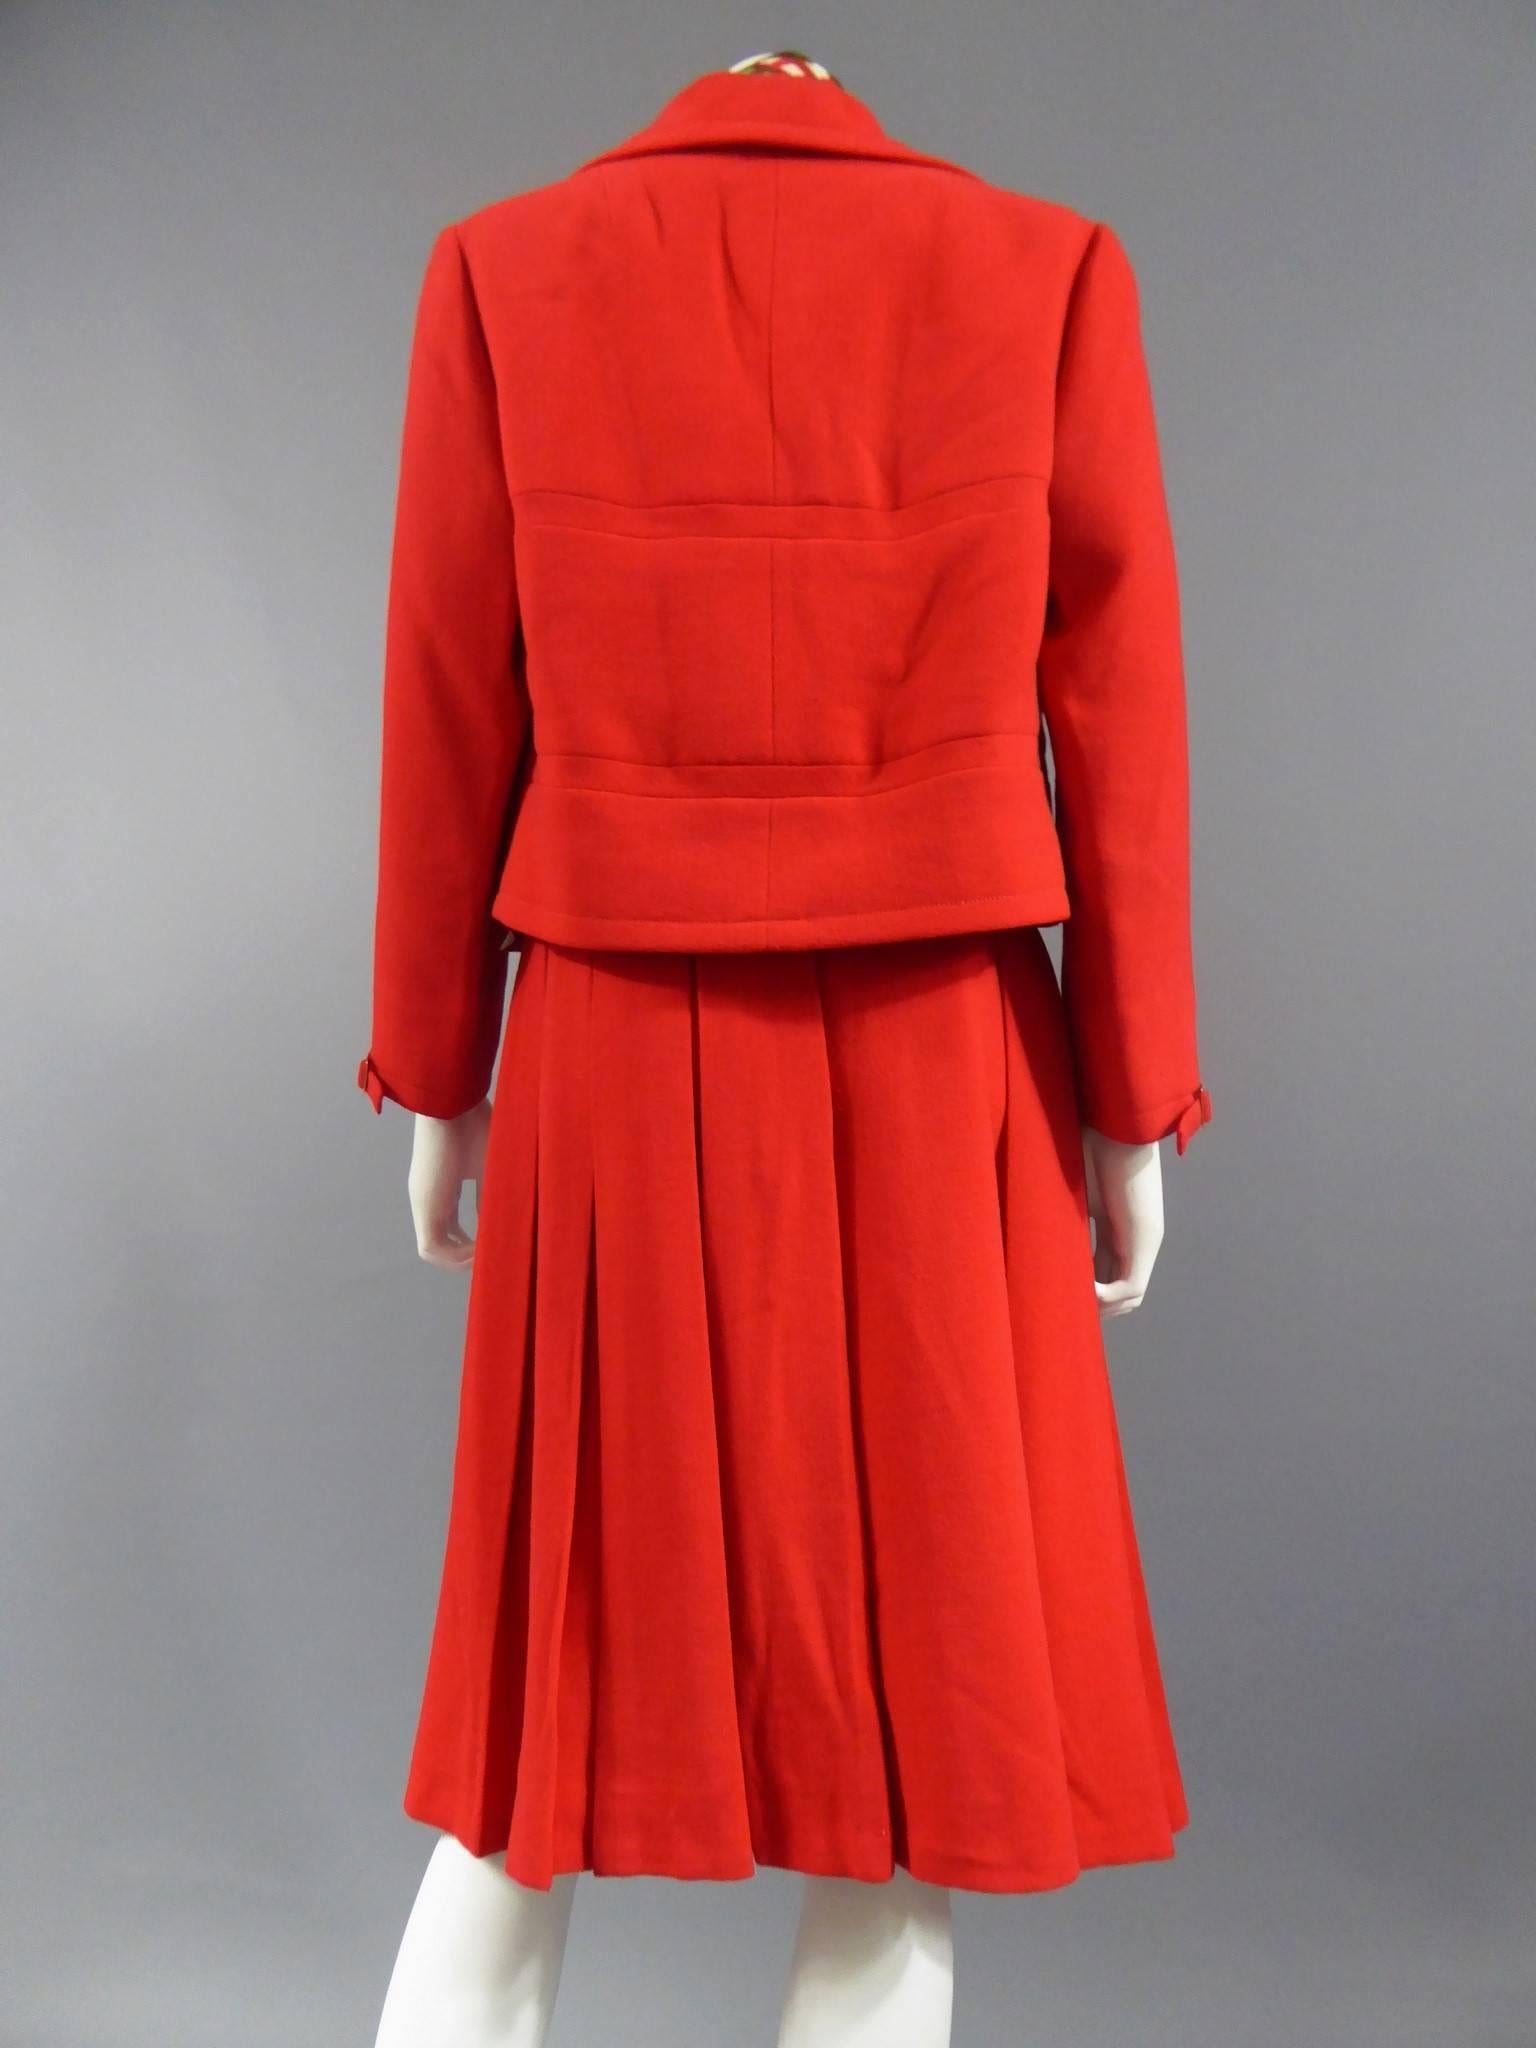 balmain red skirt